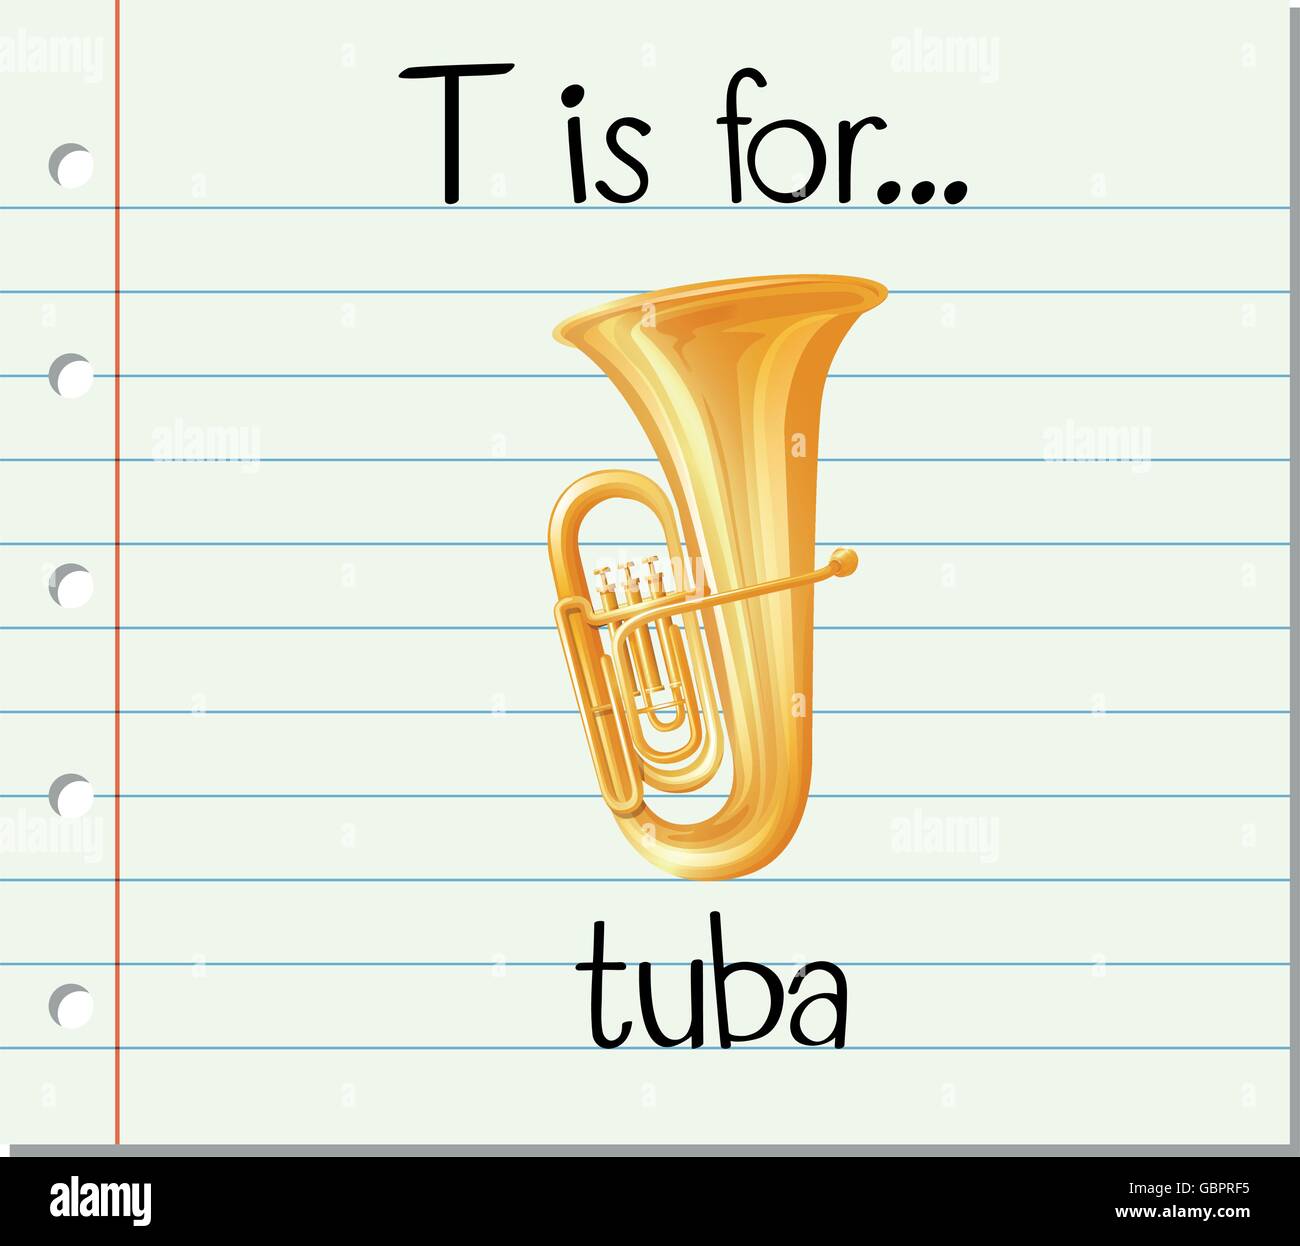 Flashcard letter T is for tuba illustration Stock Vector